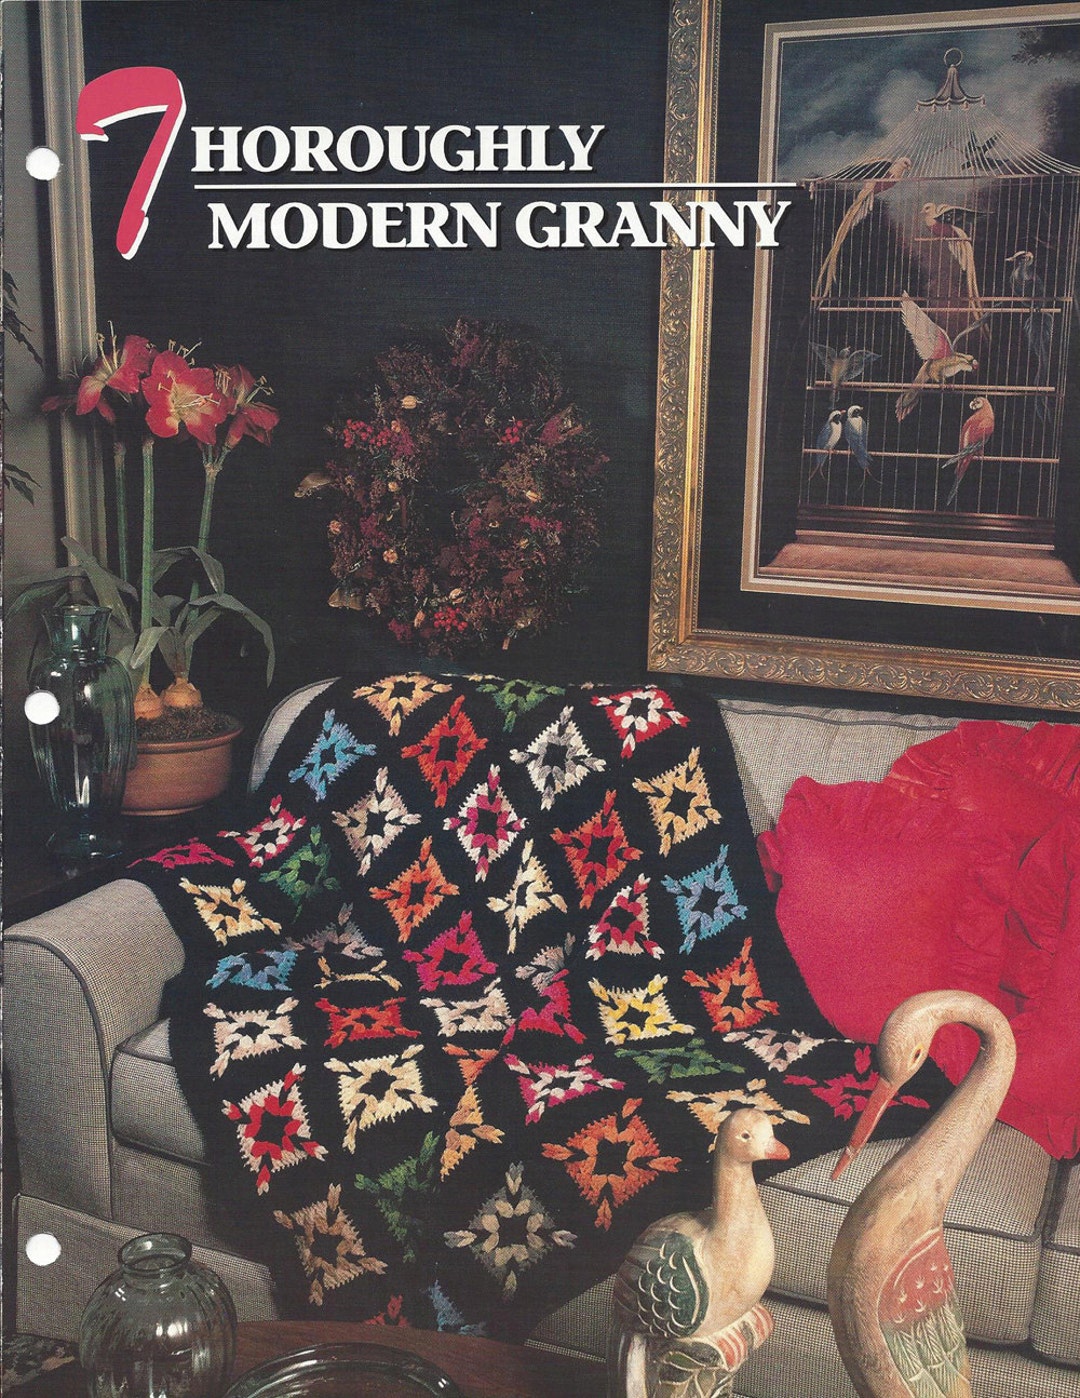 Super Easy Baby Blankets Crochet Pattern Book/Annie's Crochet #871734